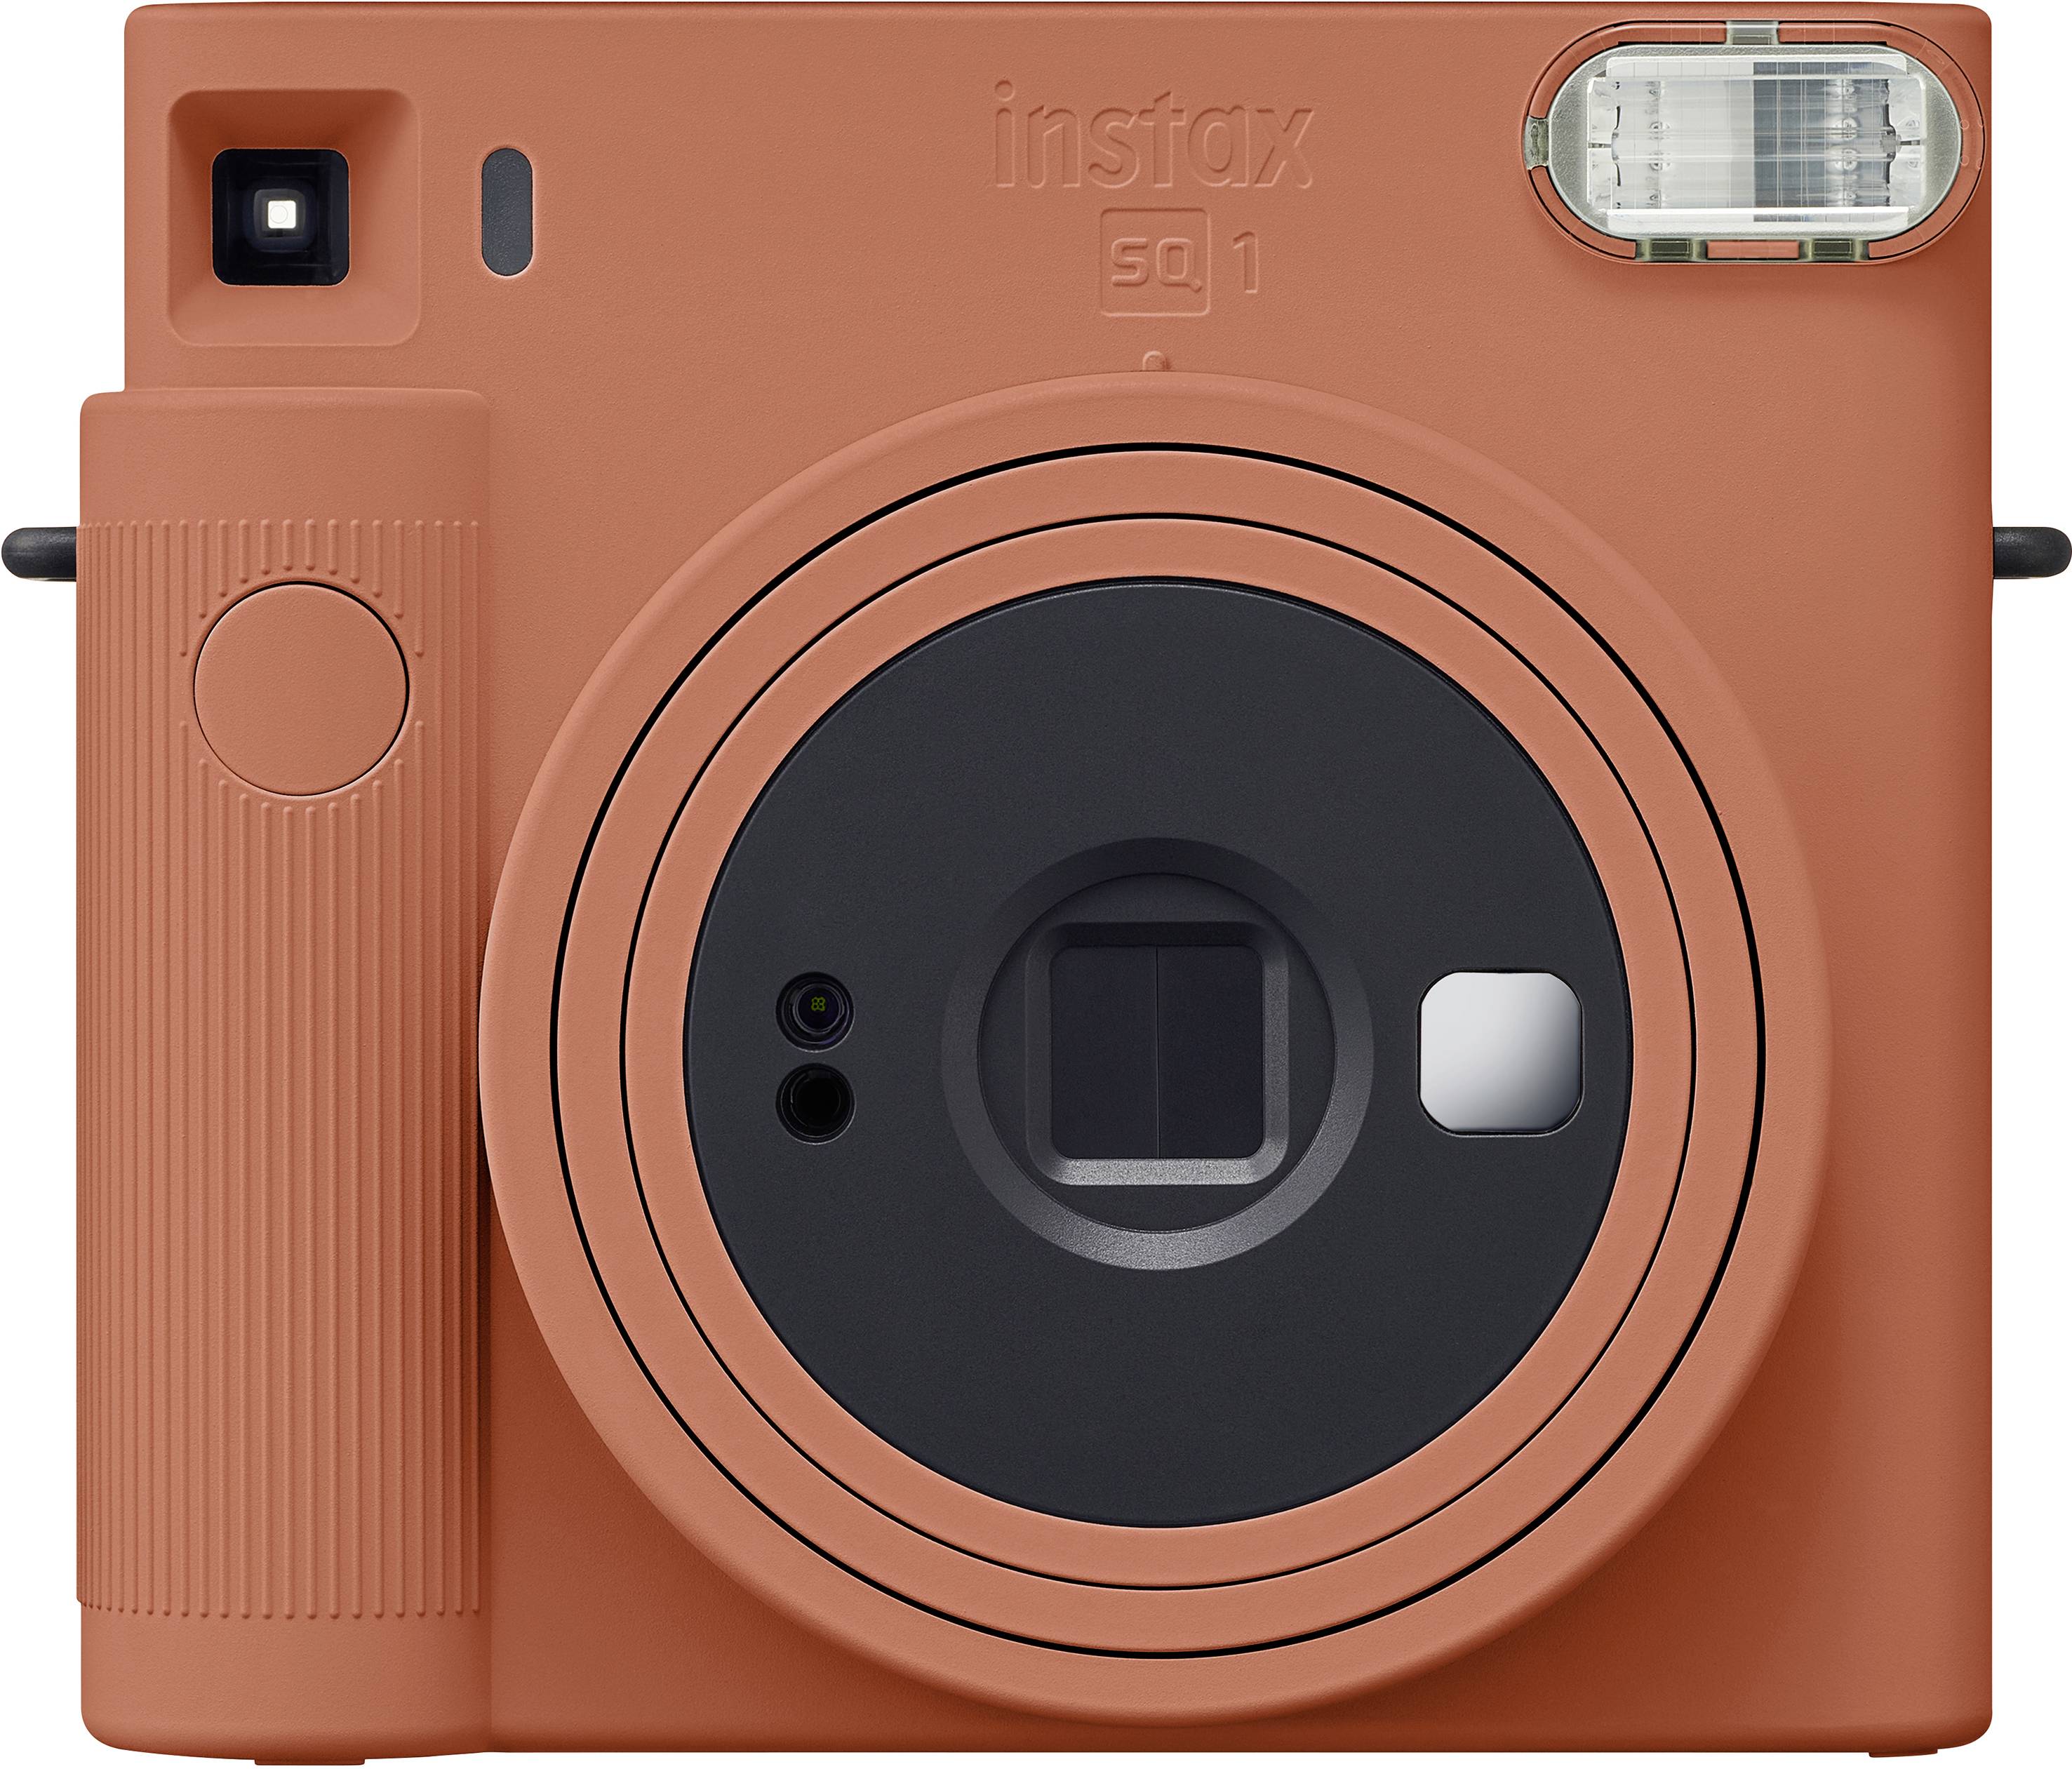 Brochure karakter opslag Fujifilm Instax SQ1 Polaroidcamera Oranje kopen ? Conrad Electronic